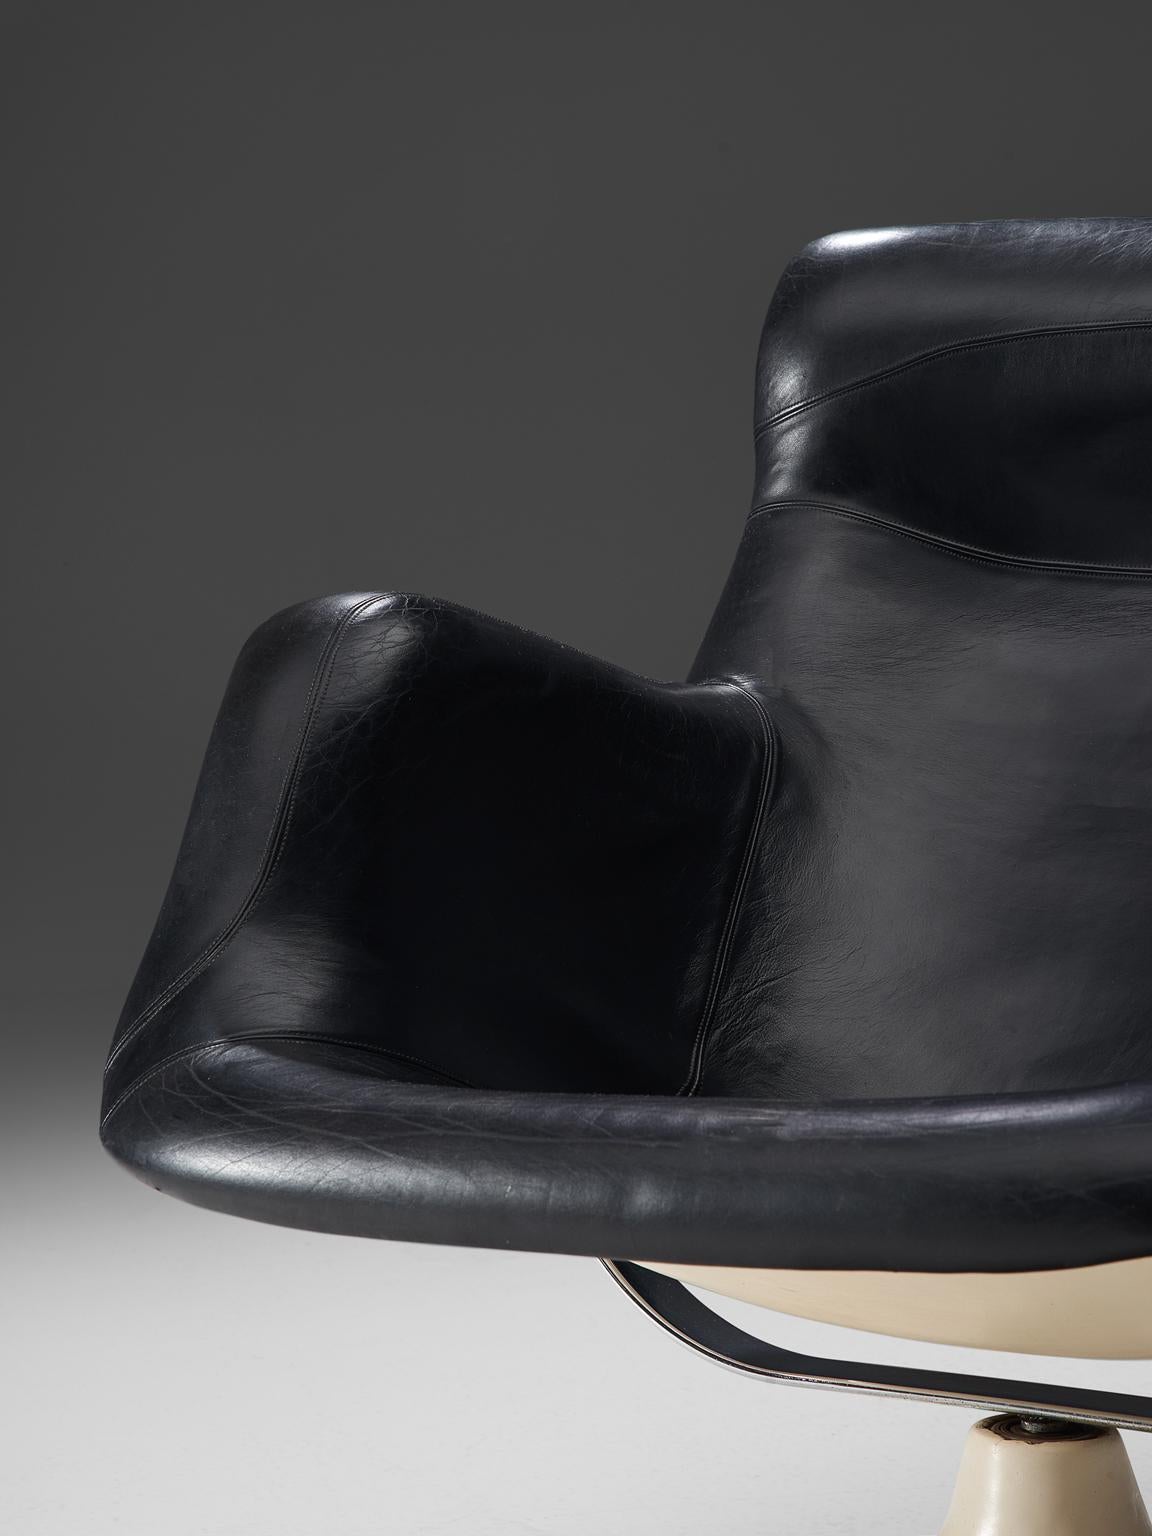 Finnish Yrjo Kukkapuro 'Karuselli' Lounge Chair in Black Leather Upholstery